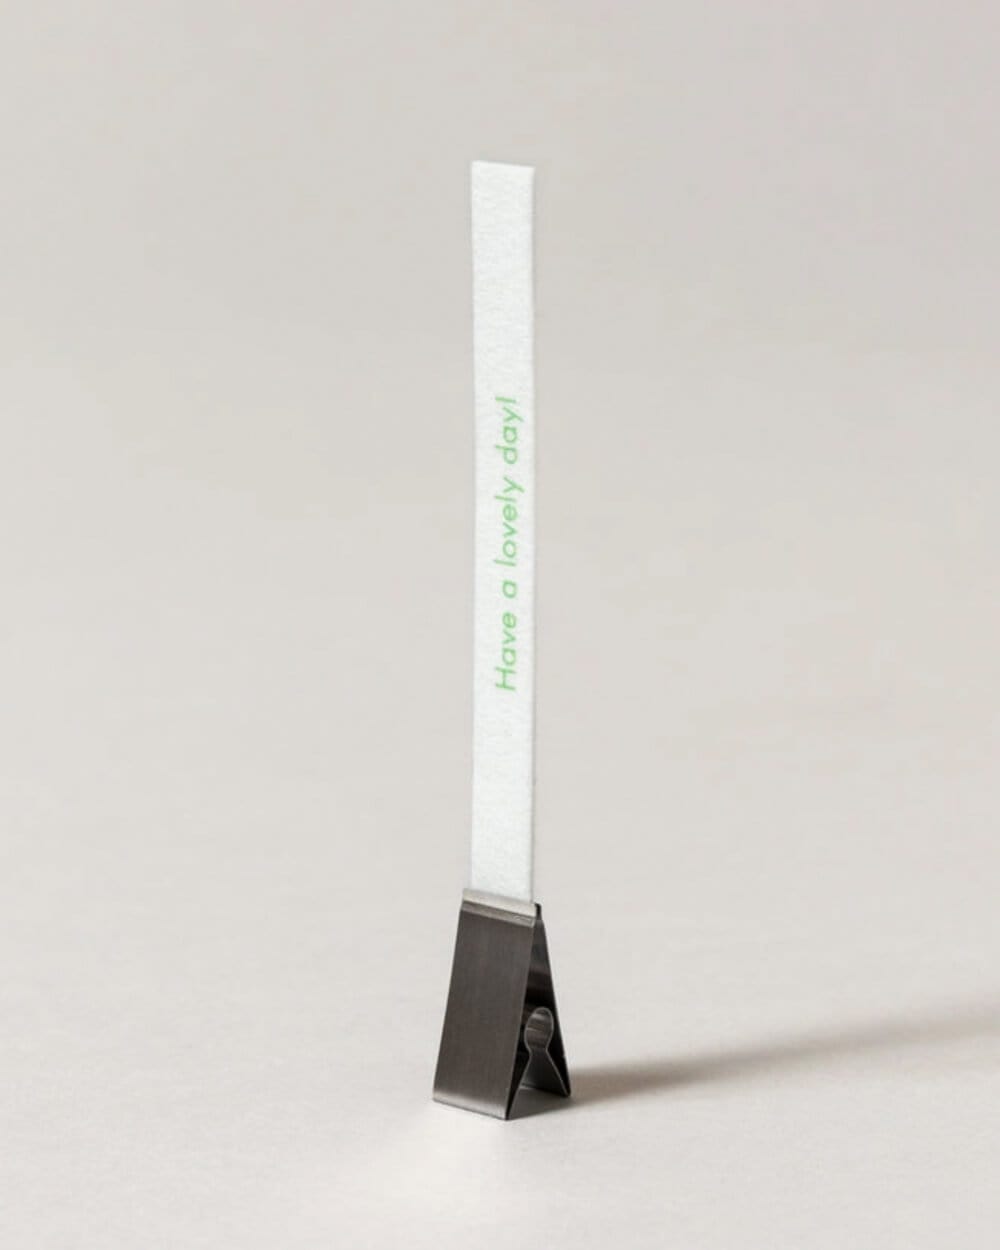 Morihata Washi Paper Incense Strips - 